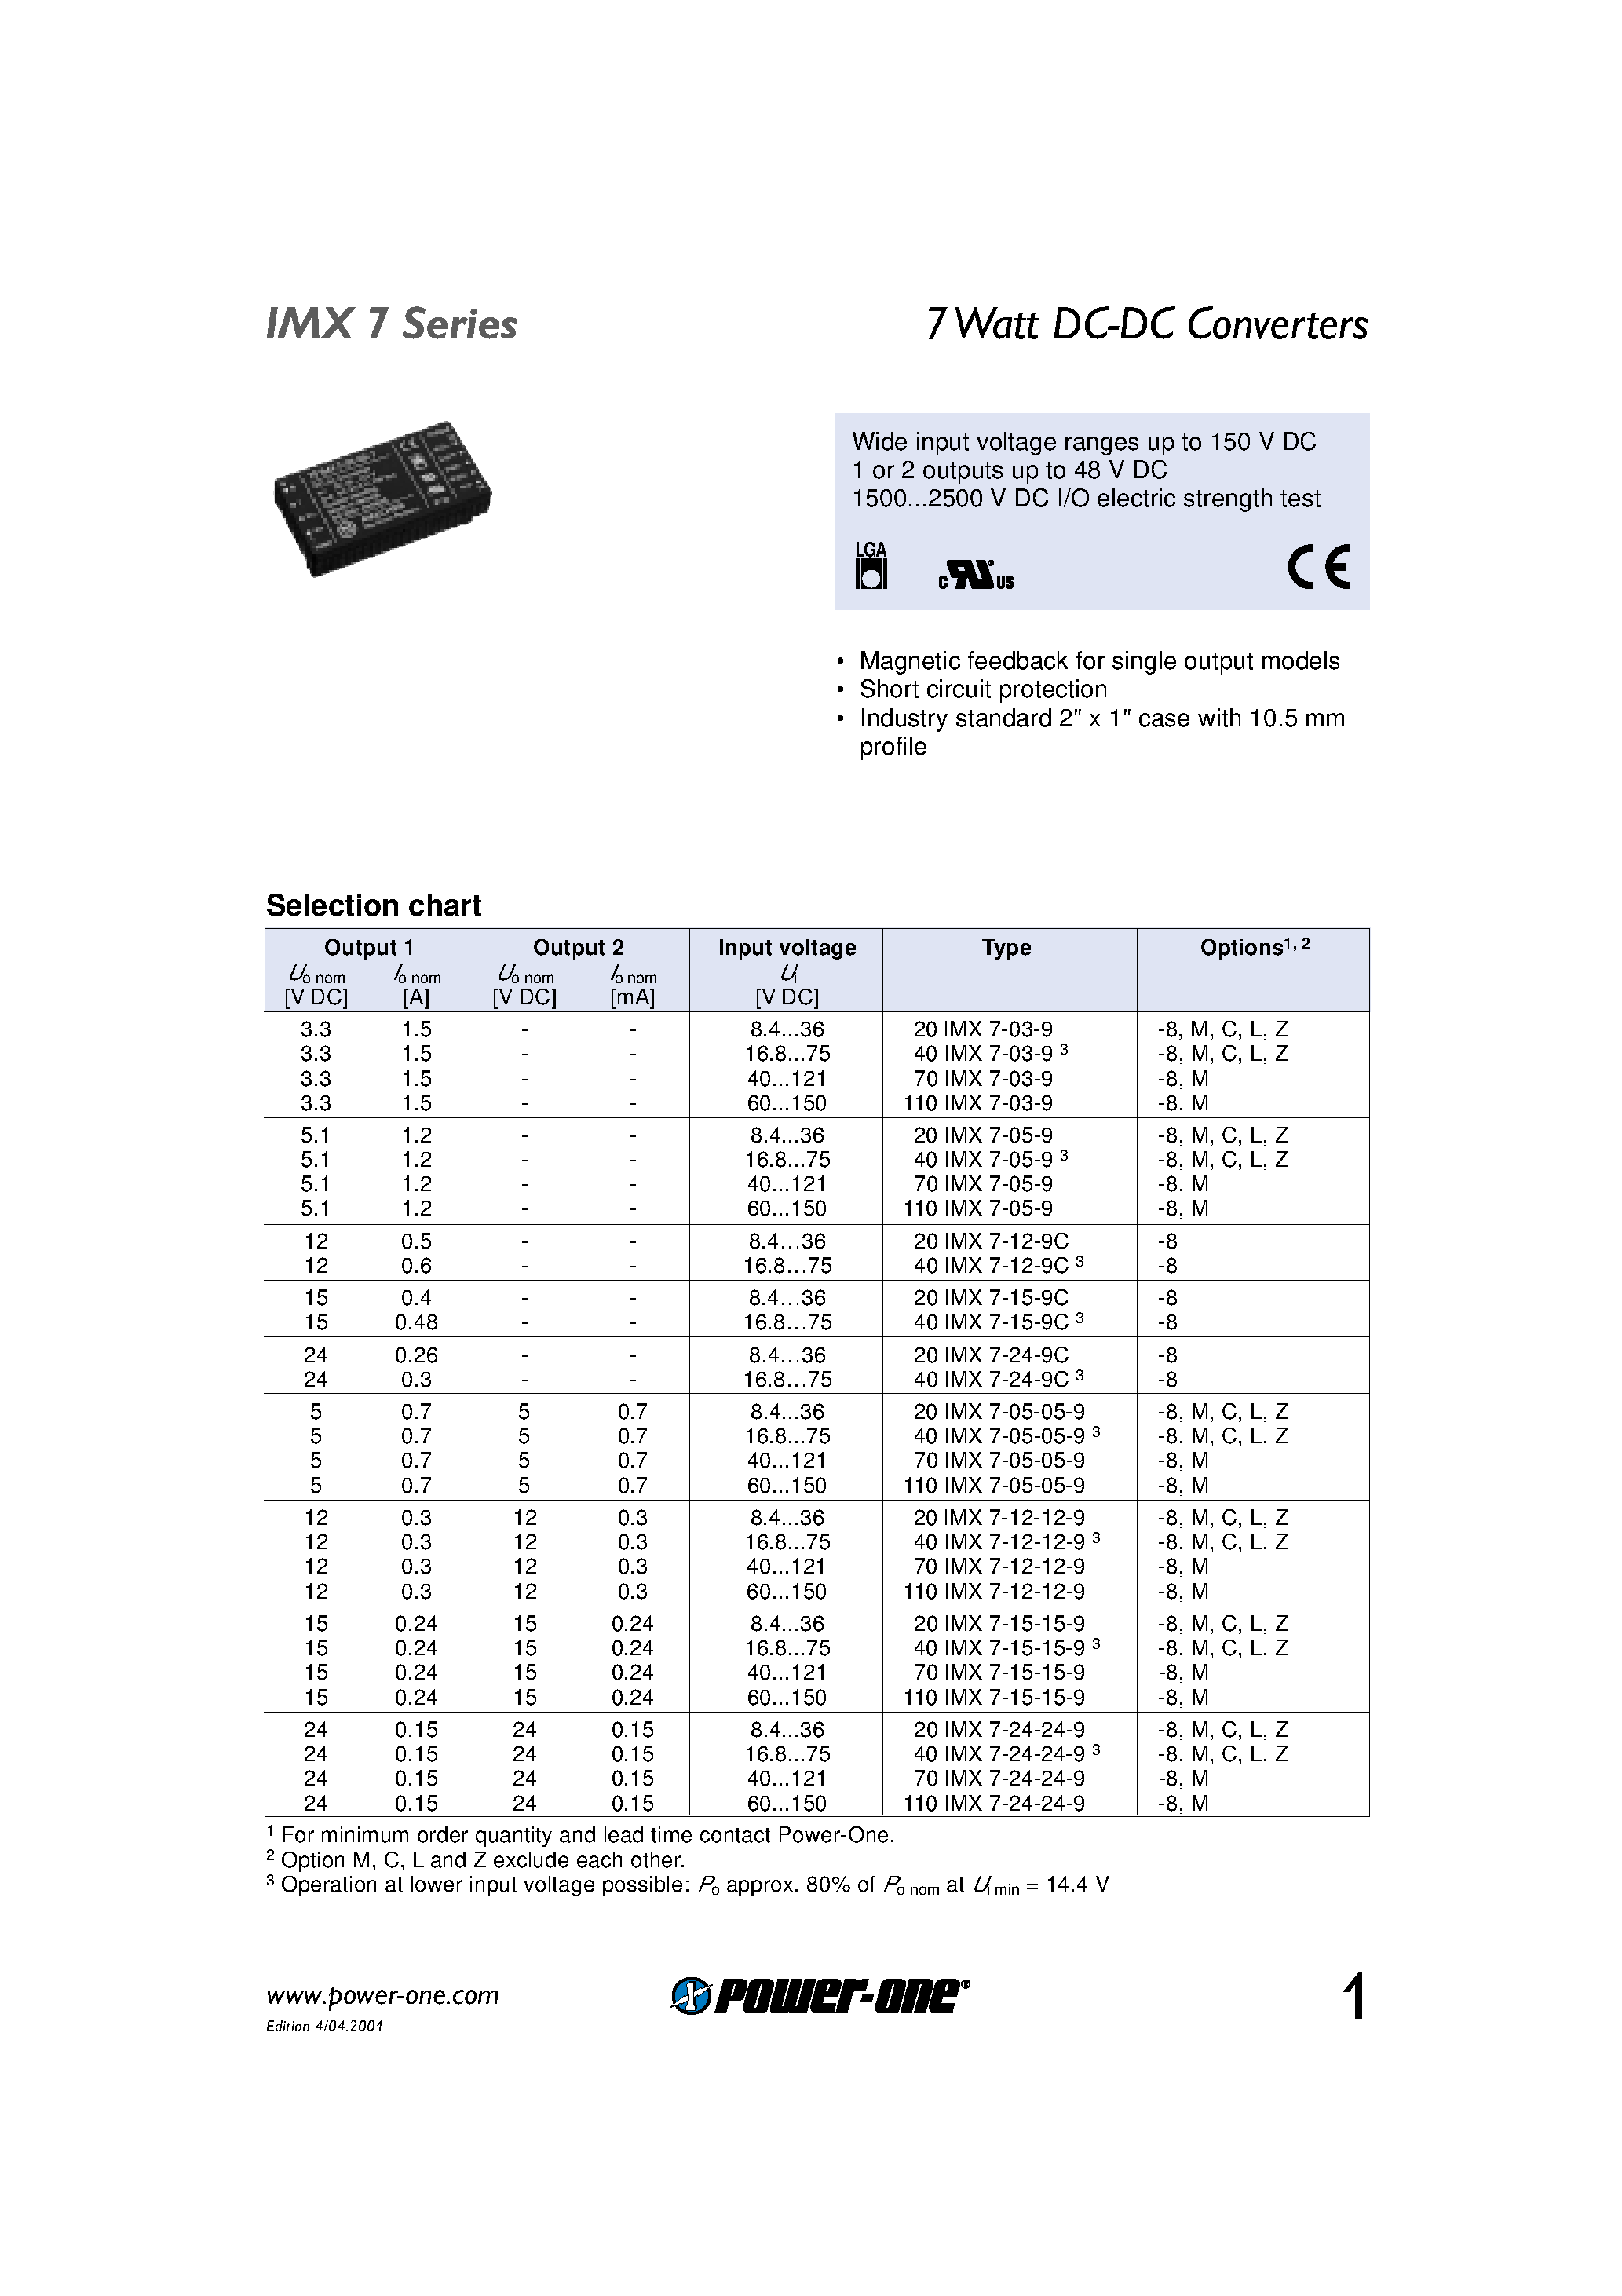 Datasheet 70IMX7-24-24-9 - 7 Watt DC-DC Converters page 1